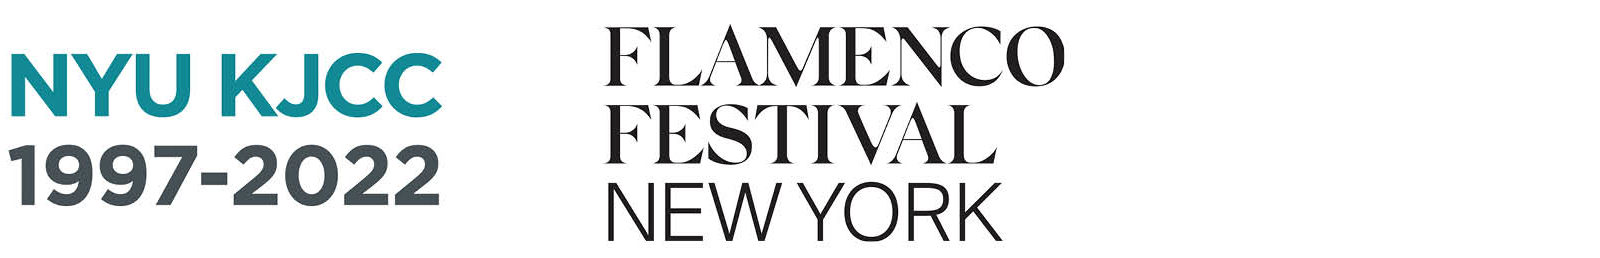 Logos: NYU KJCC 1997-2022. Flamenco Festival New York